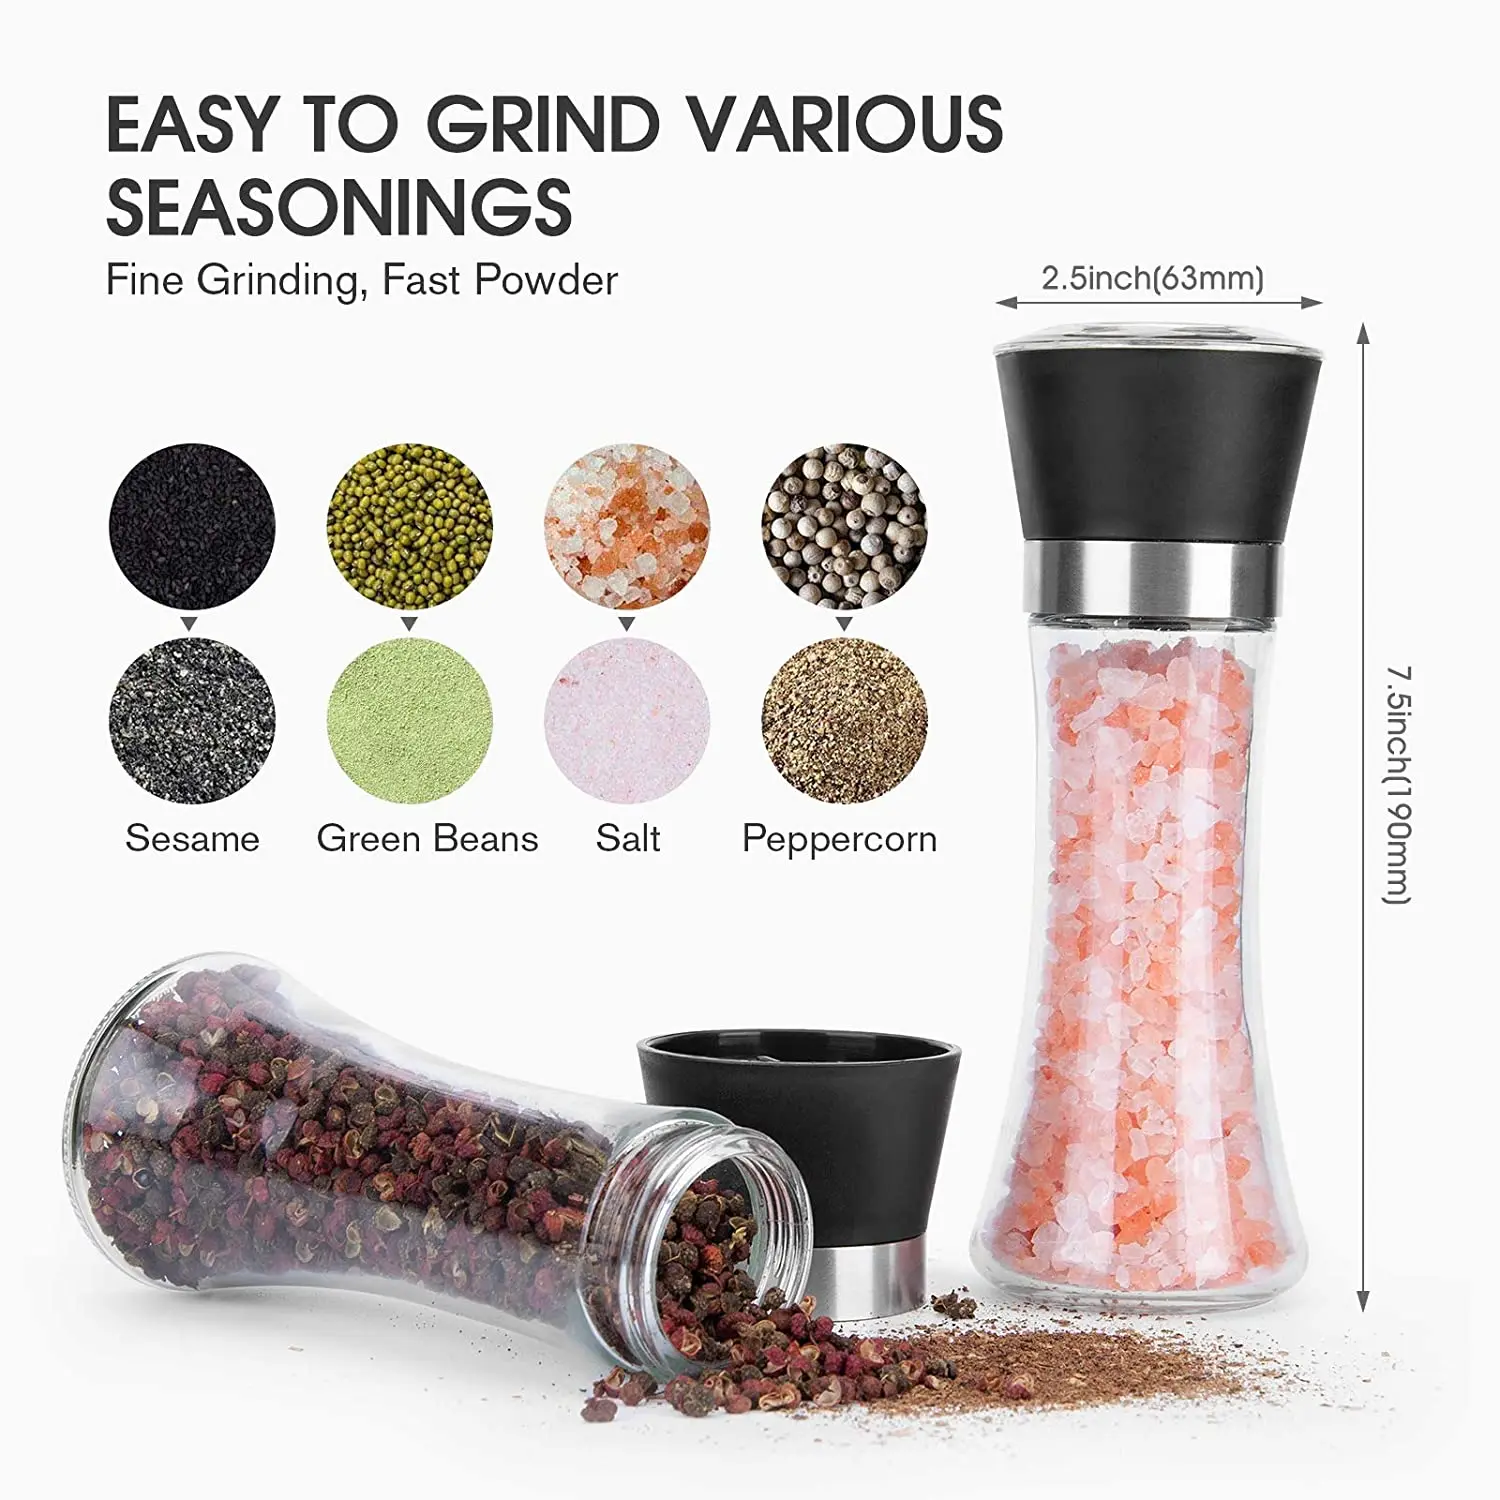 Kalorik Gravity Salt and Pepper Grinder Set – 365 Wholesale